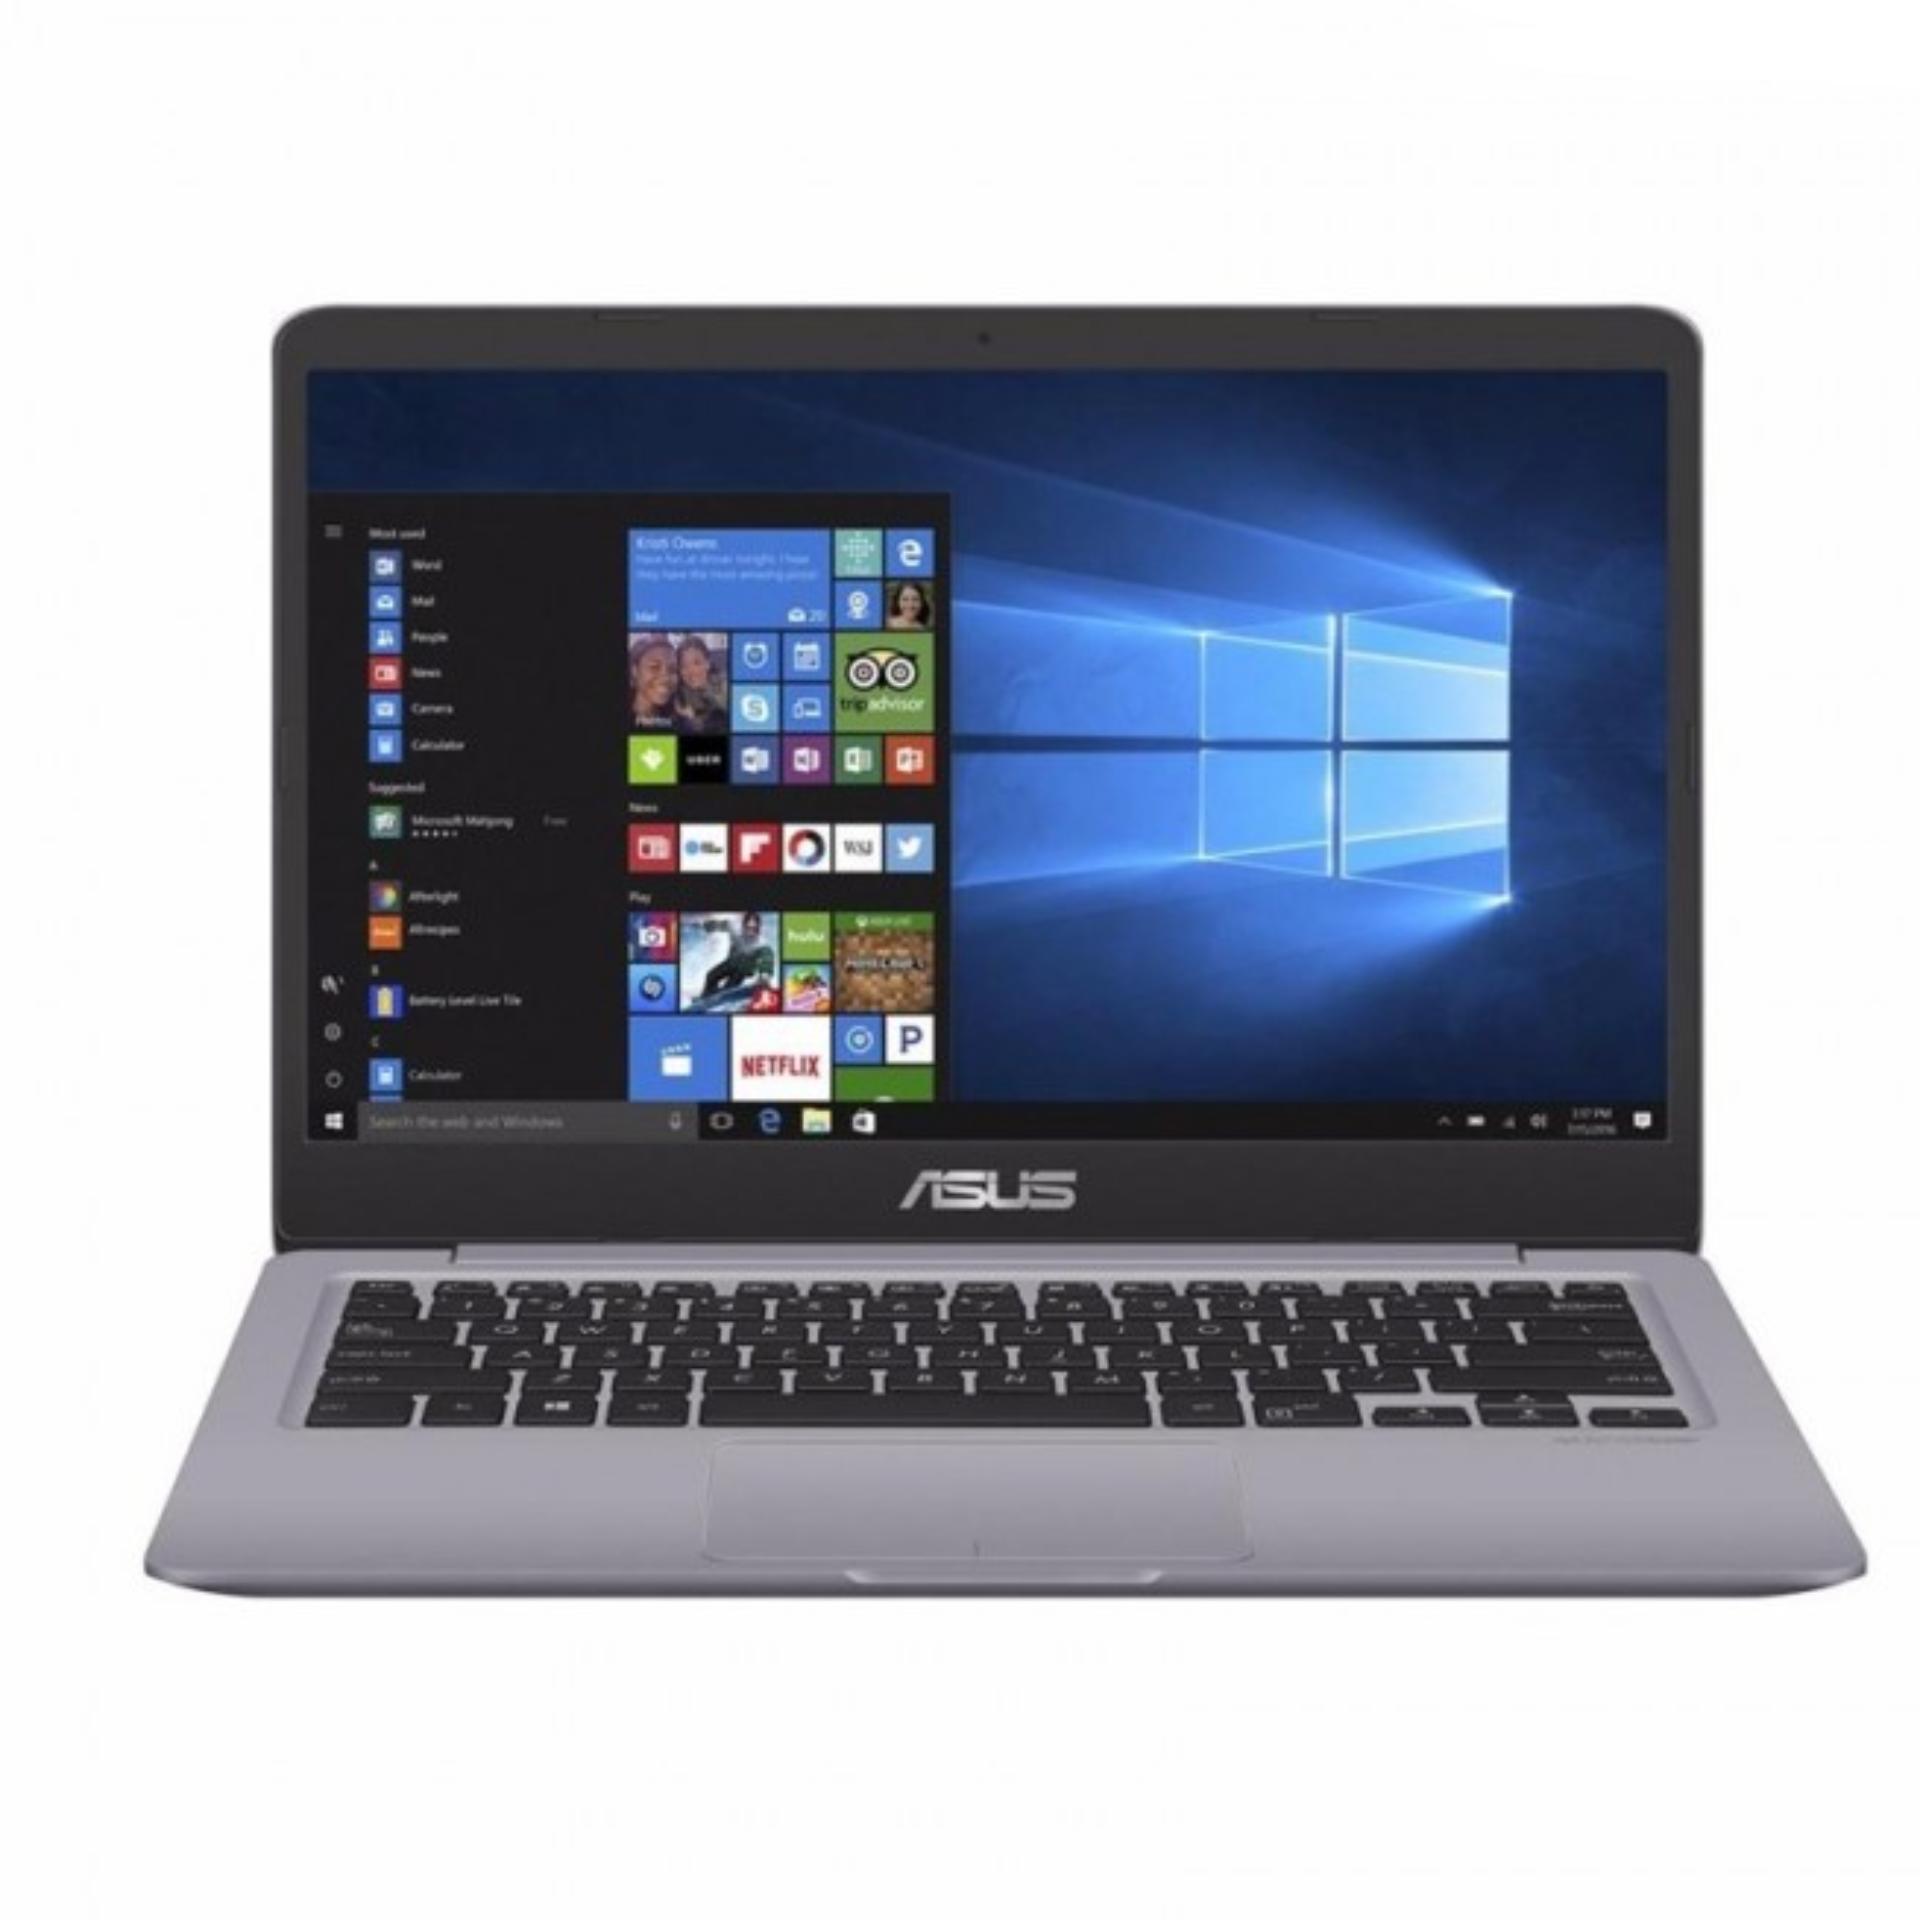 ASUS VivoBook S410UN-EB146TS 14.0” LED Display 8th Gen Intel® Core™ i7-8550U processor 8GB DDR3 RAM & 1TB HDD Discrete Graphics MX150 with 2GB DDR5 W10